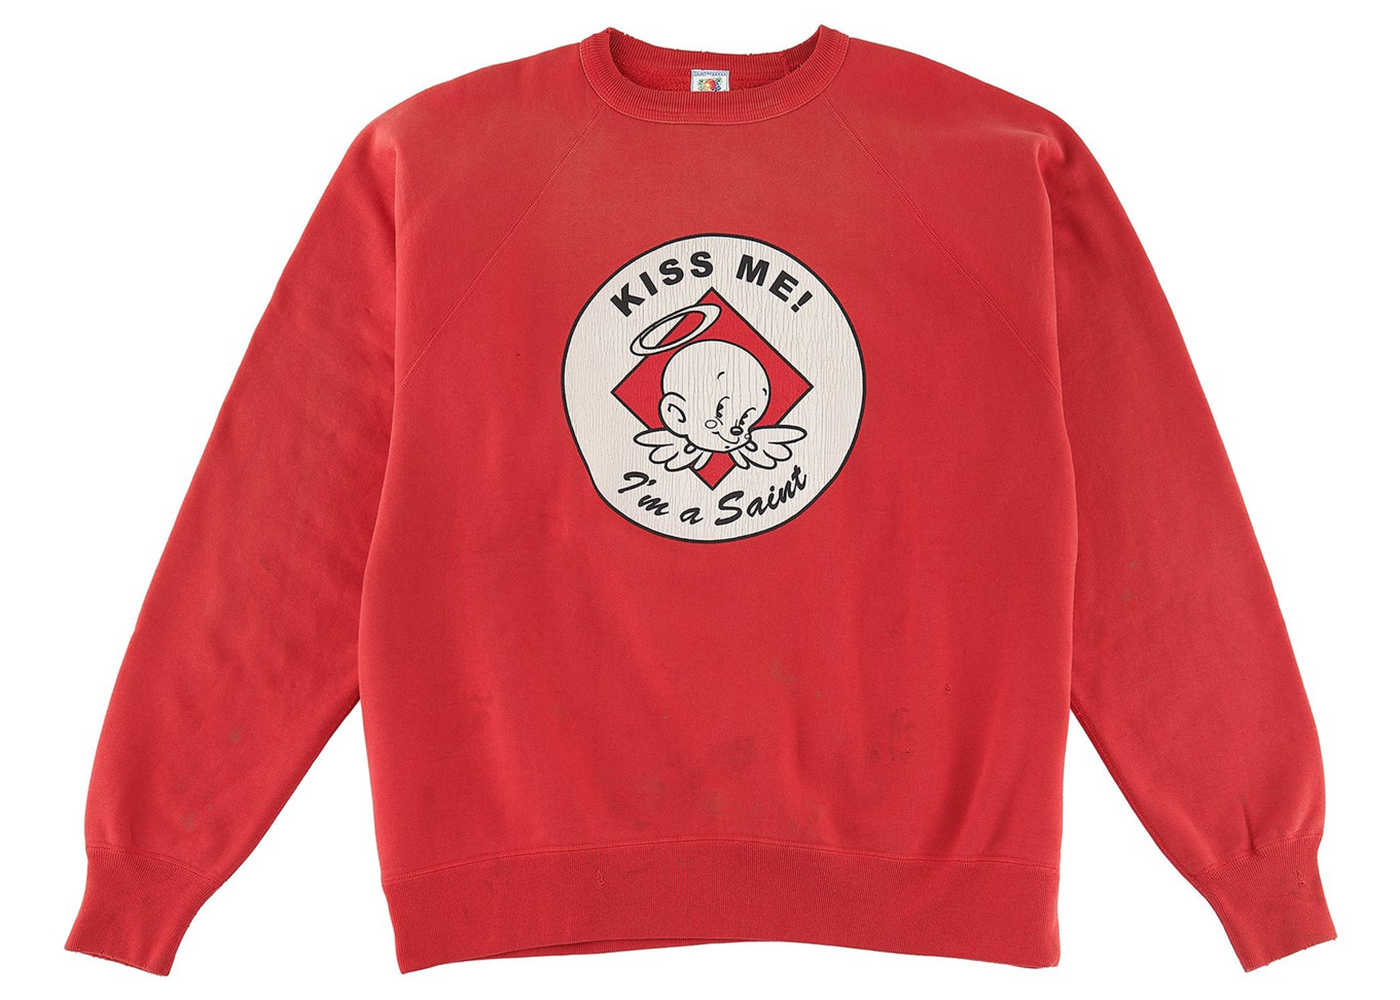 Saint Mxxxxxx Kiss Me Crewneck Sweatshirt Vintage Red